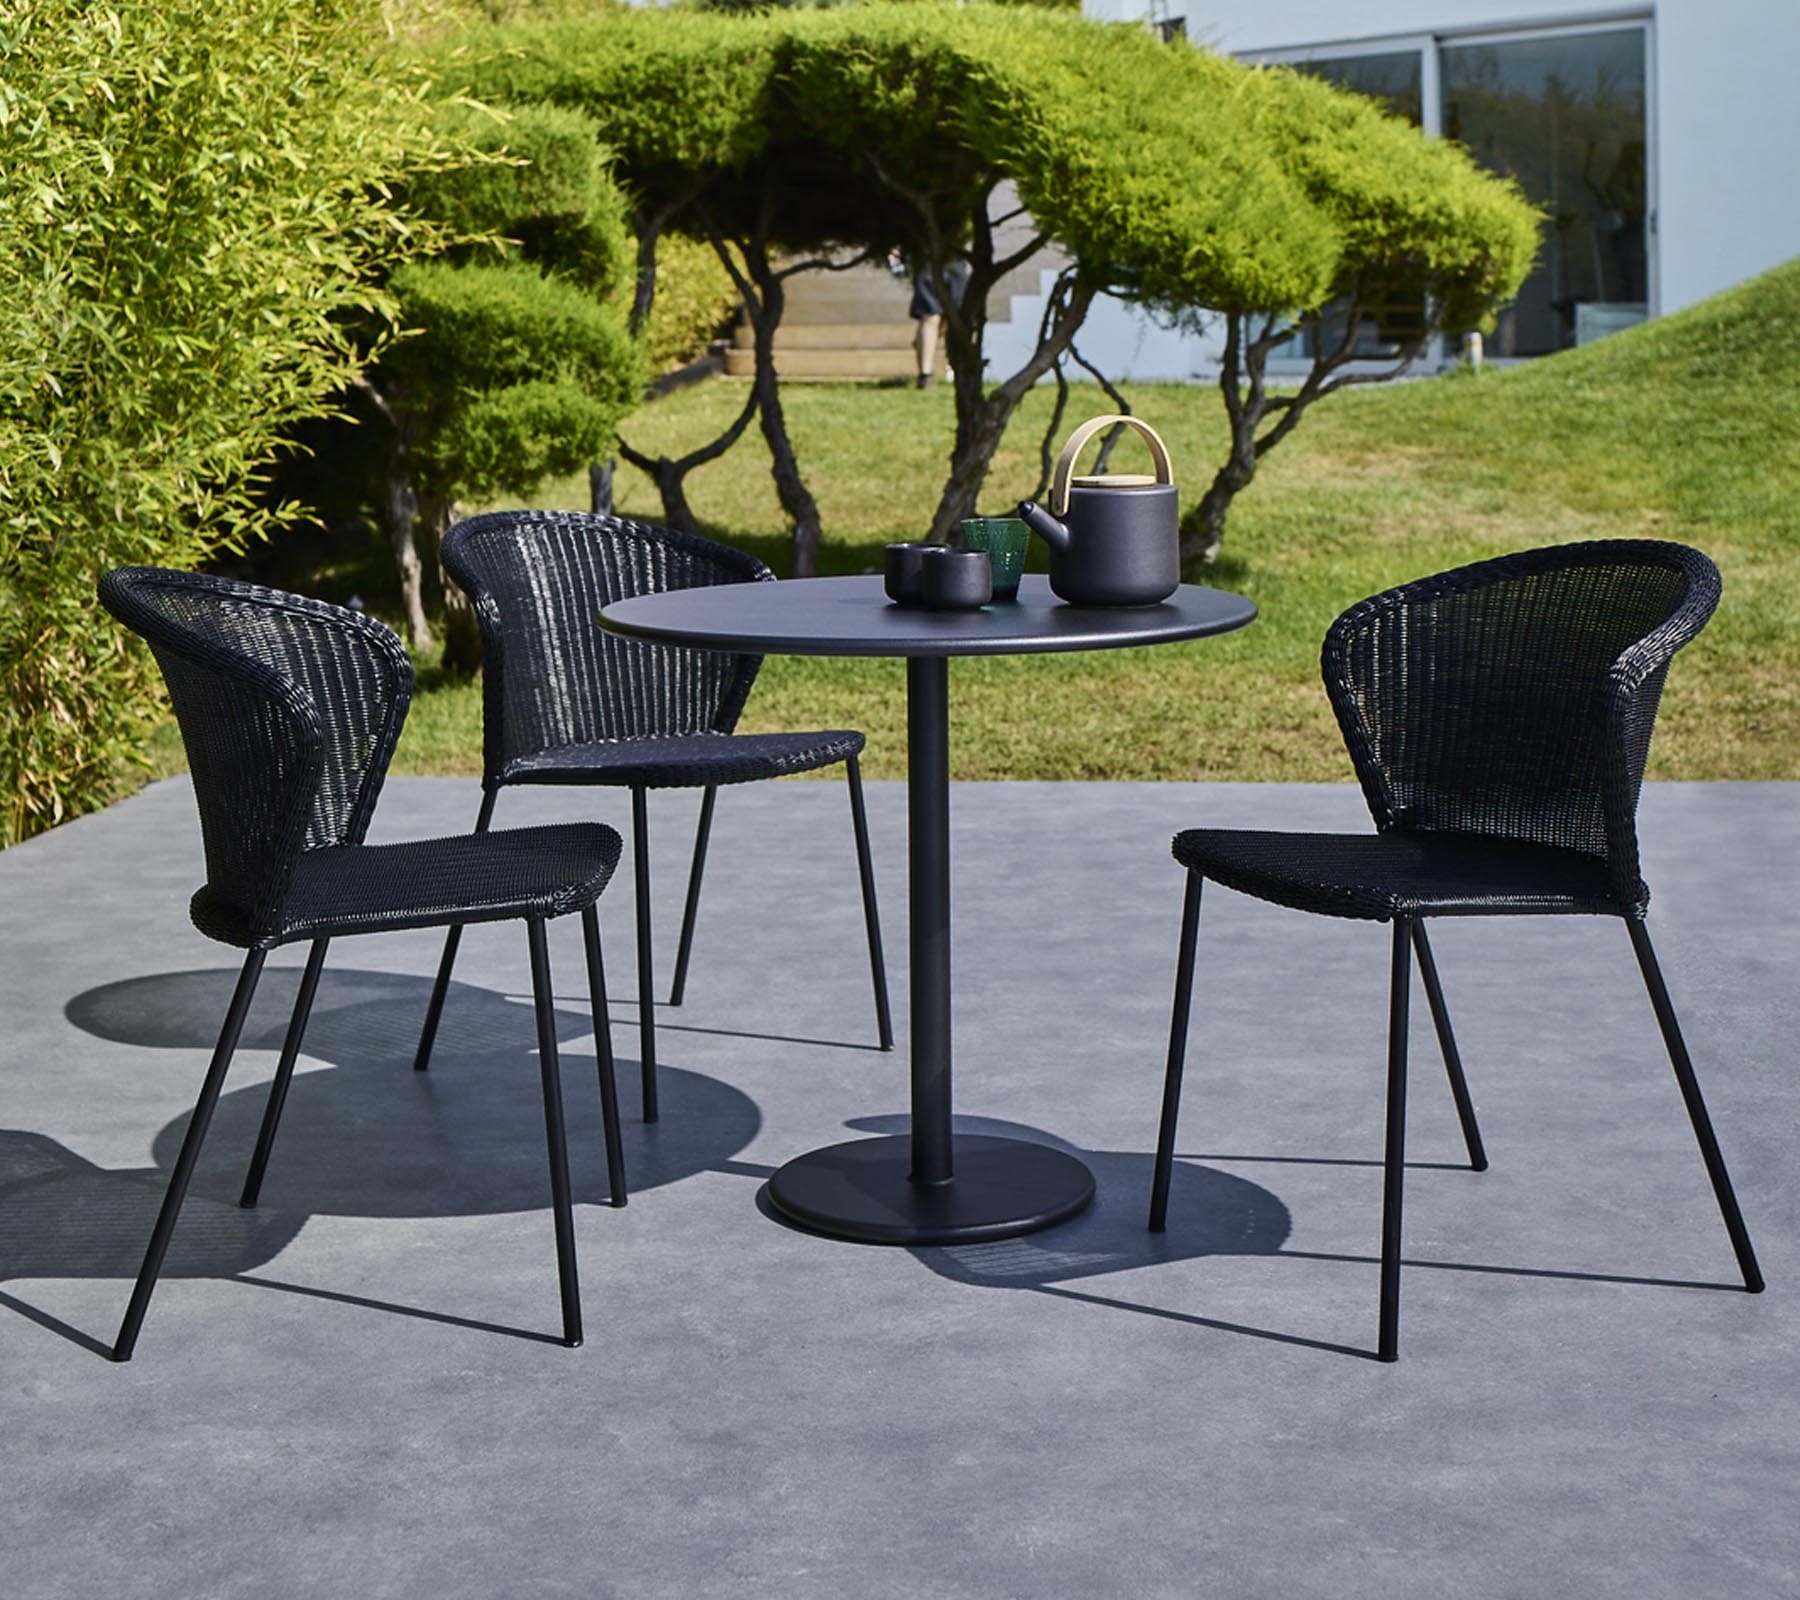 Lean Stackable Outdoor Garden Chair Lifestyle